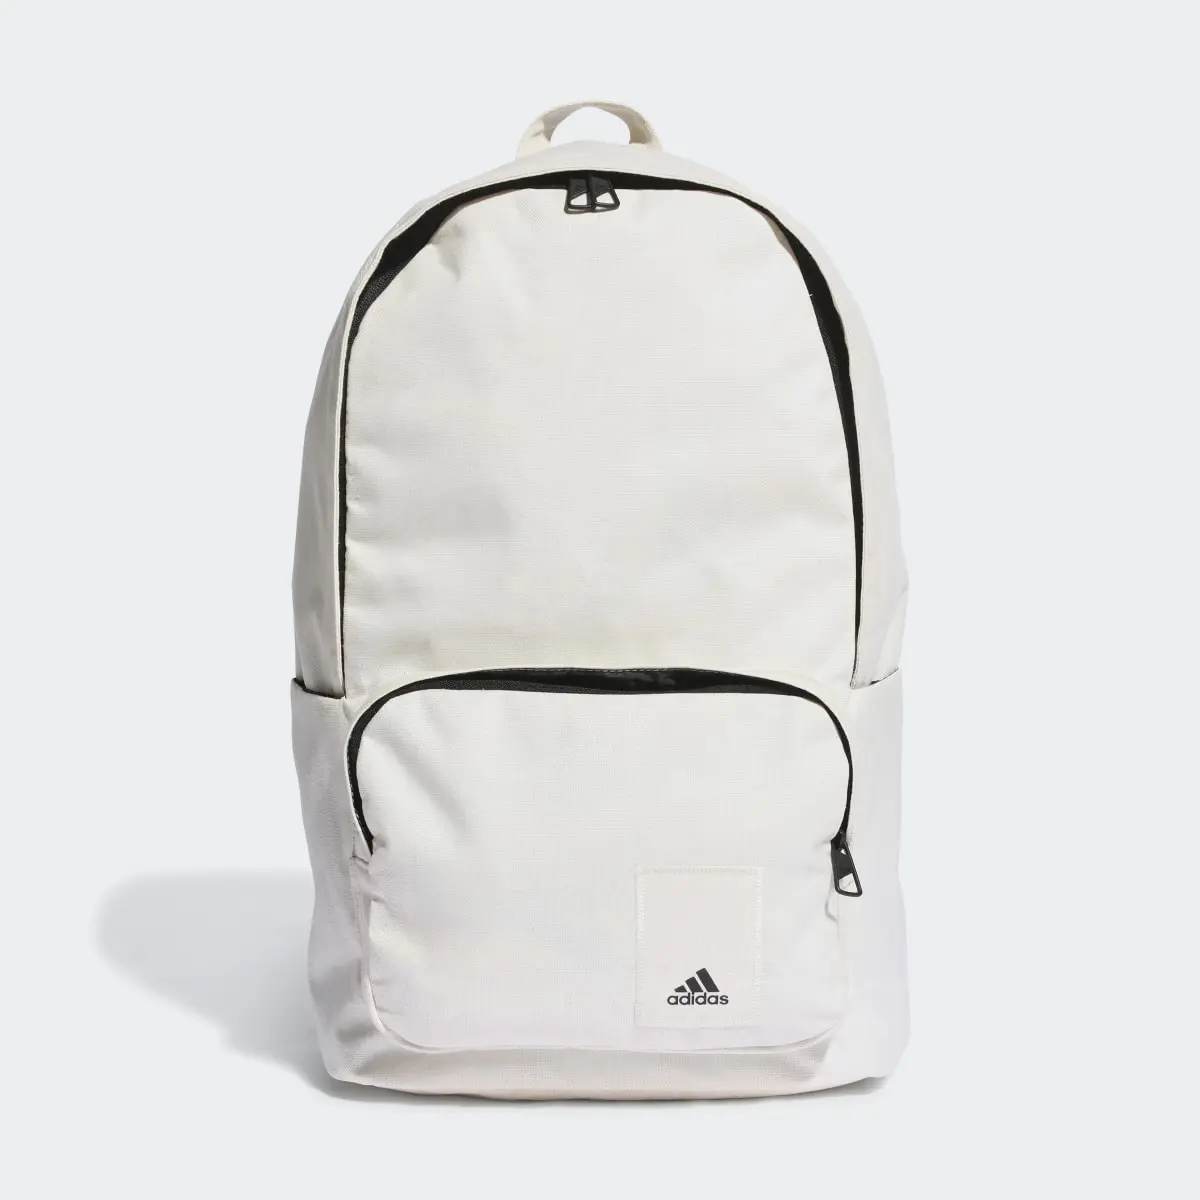 Adidas Classic Foundation Lounge Attitude Backpack 2. 2